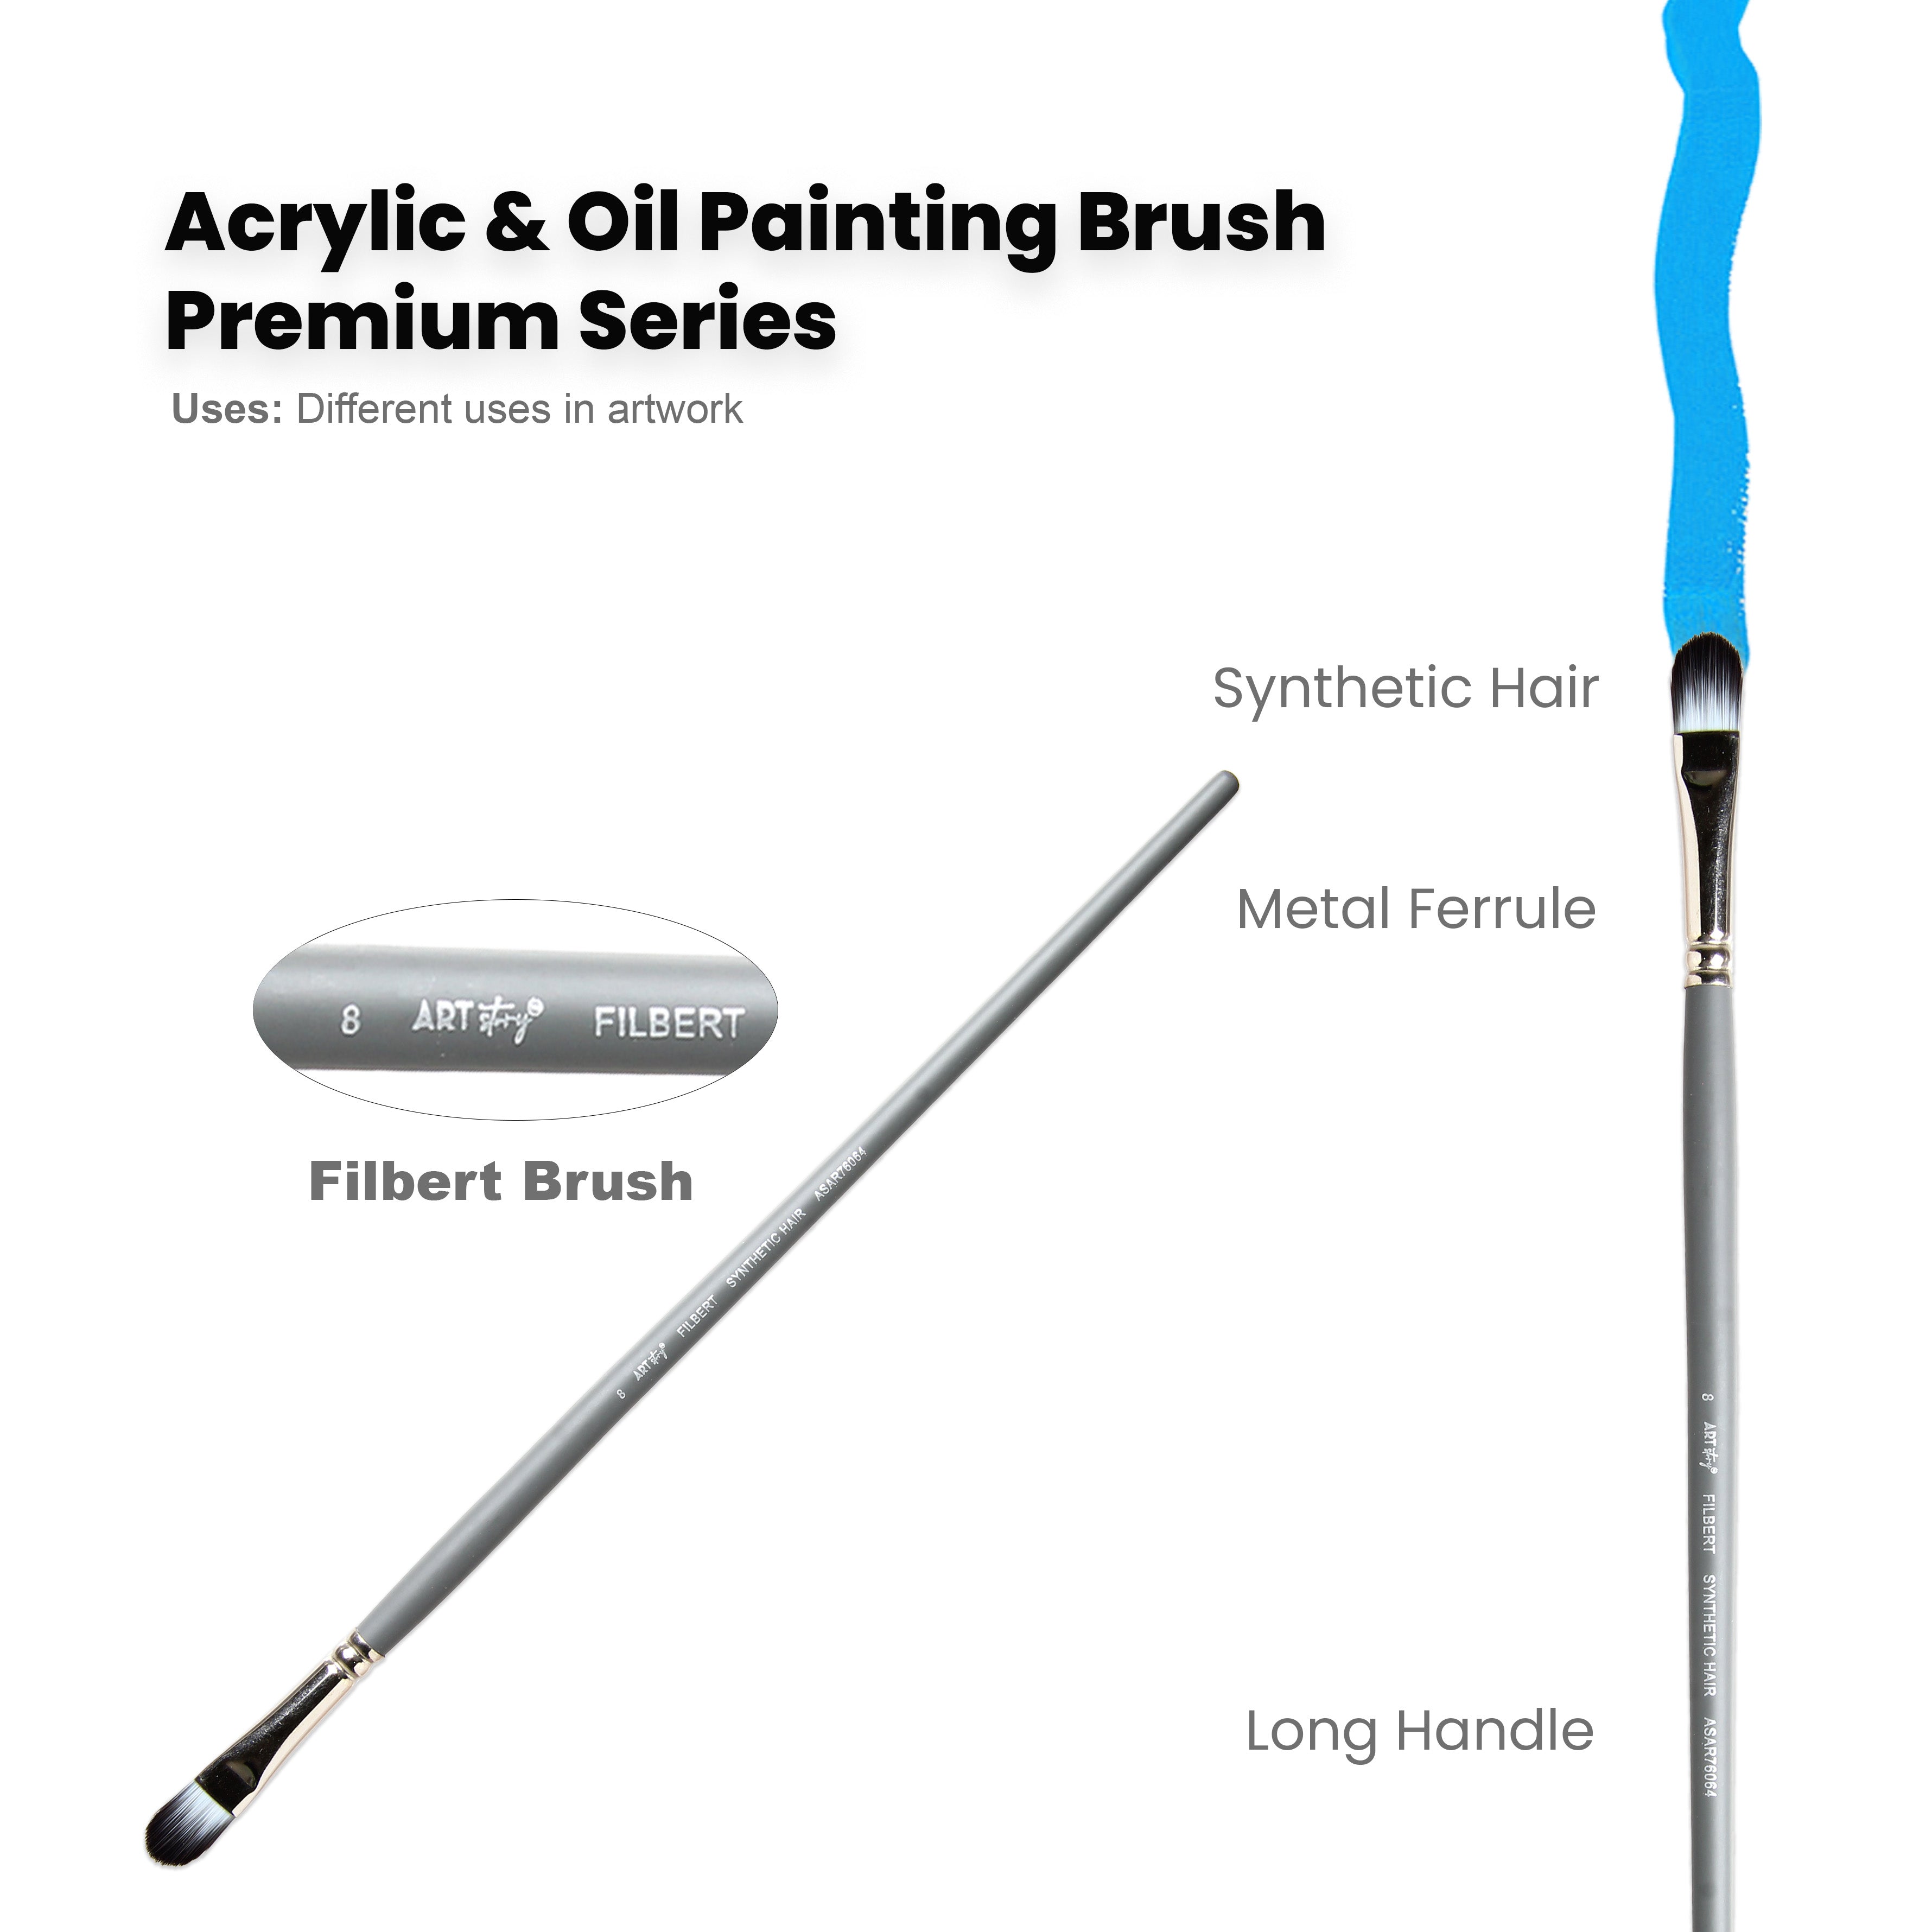 Long Handle Filbert Brush Synthetic Hair Size 8 Handle Length 250mm